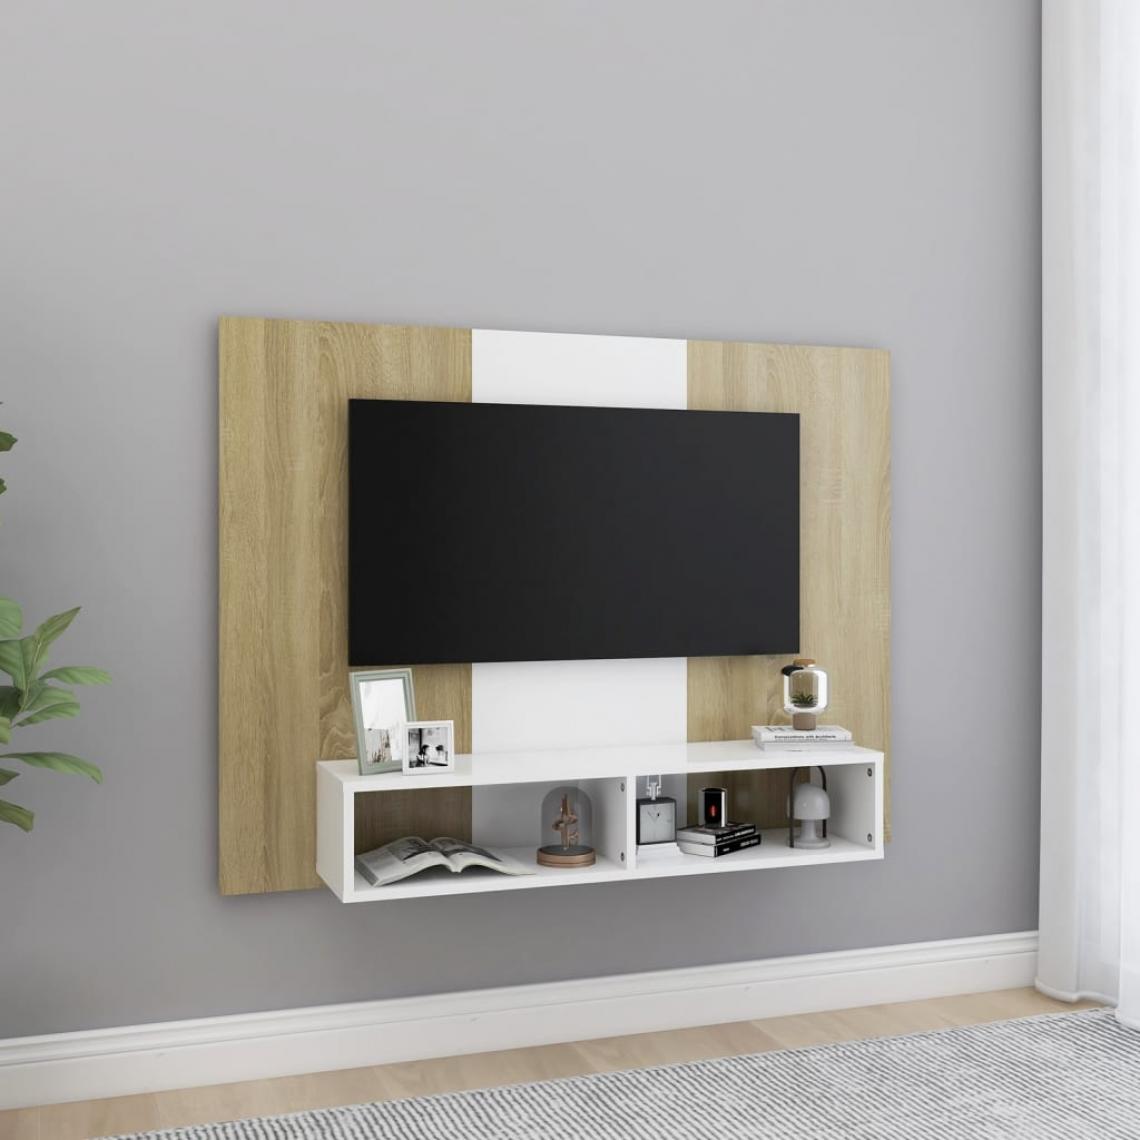 Vidaxl - vidaXL Meuble TV mural Blanc et chêne Sonoma 120x23,5x90 cm Aggloméré - Meubles TV, Hi-Fi